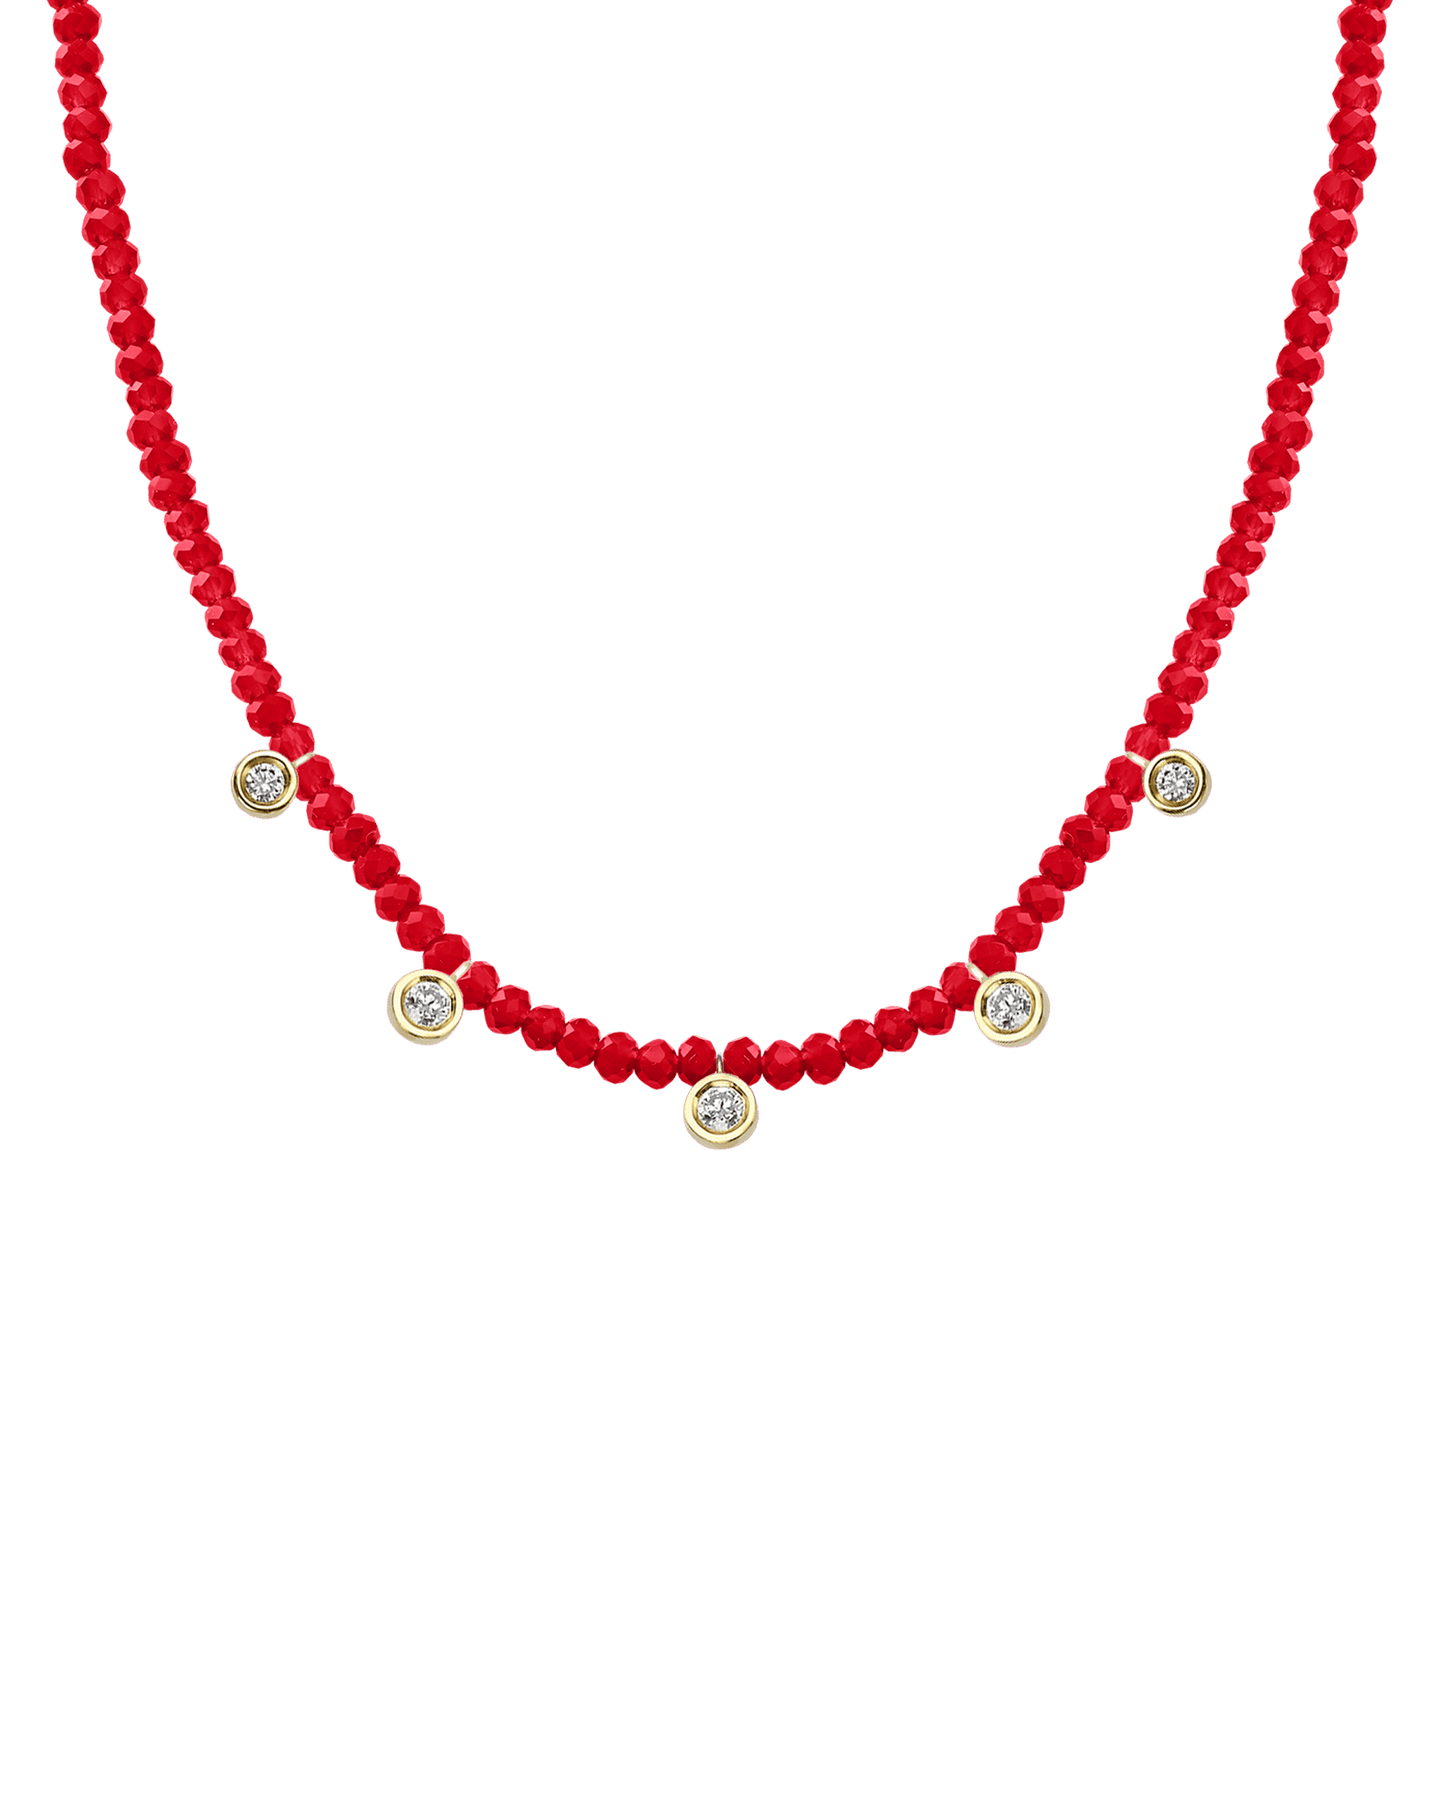 Purple Amethyst Gemstone & Five diamonds Necklace - 14K White Gold